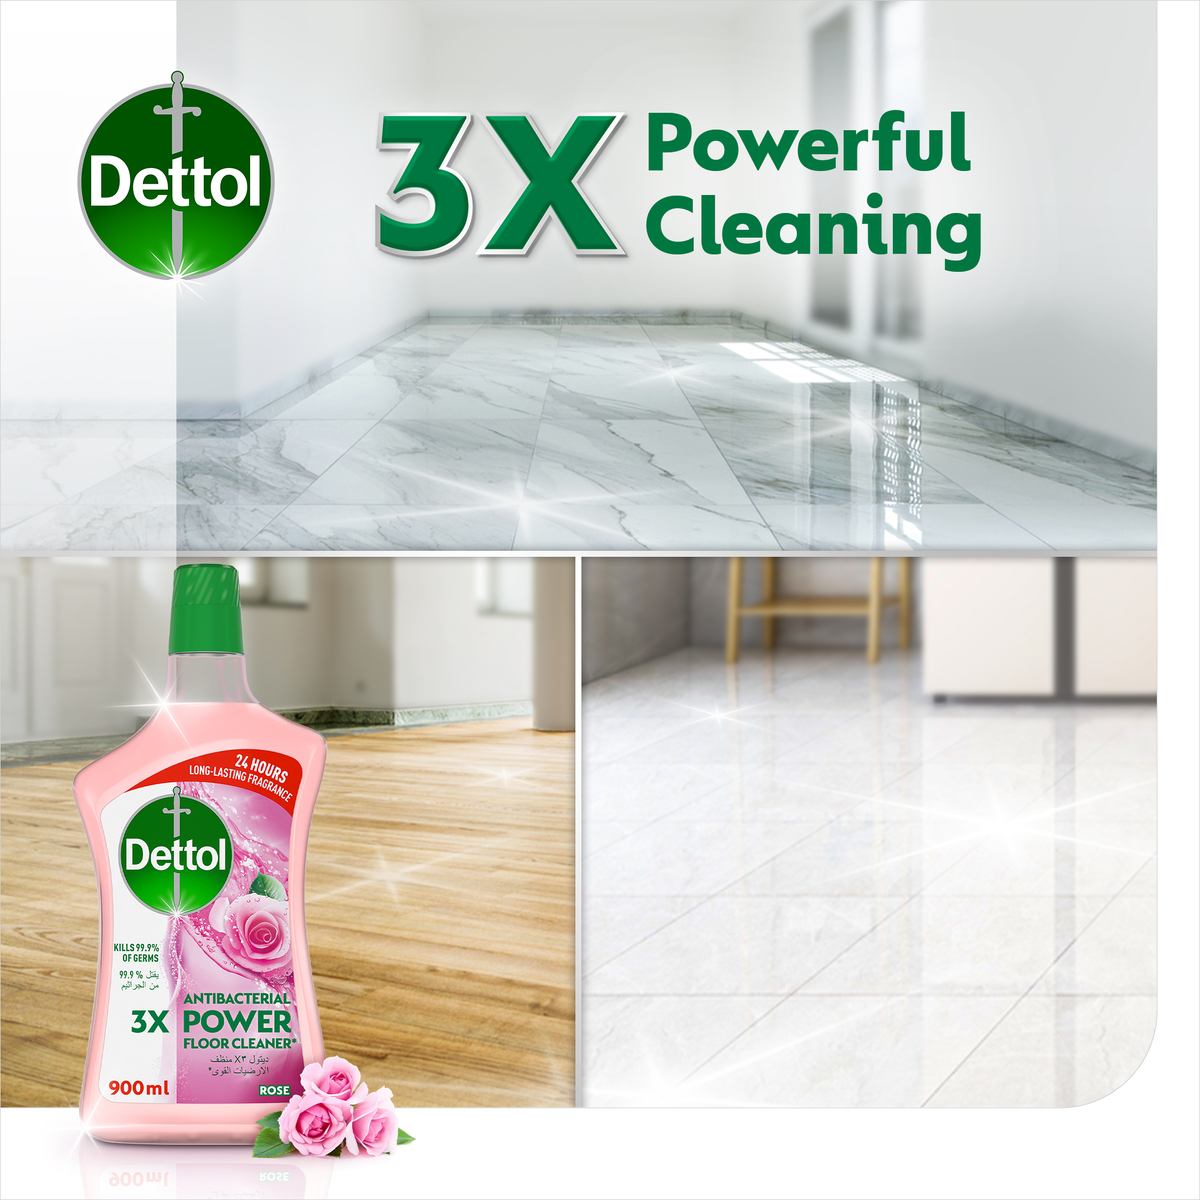 Dettol Rose Antibacterial Power Floor Cleaner 900 ml